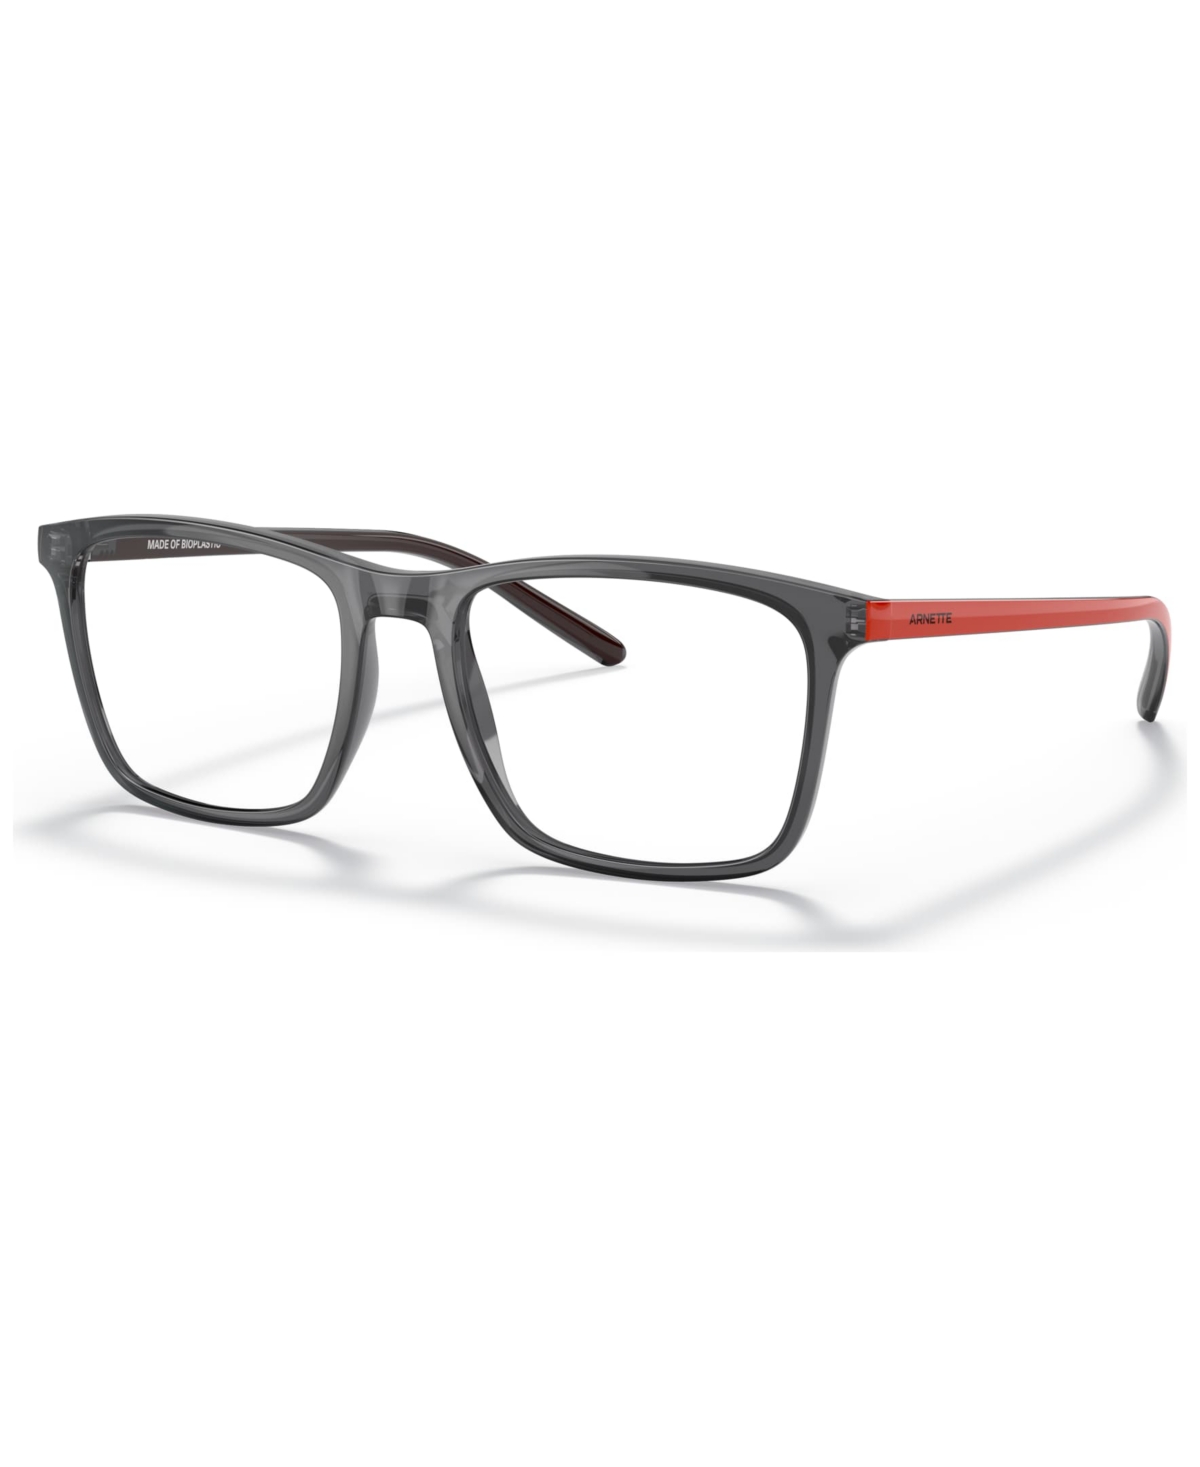 Unisex Frogface Eyeglasses, AN7209 - Transparent Gray